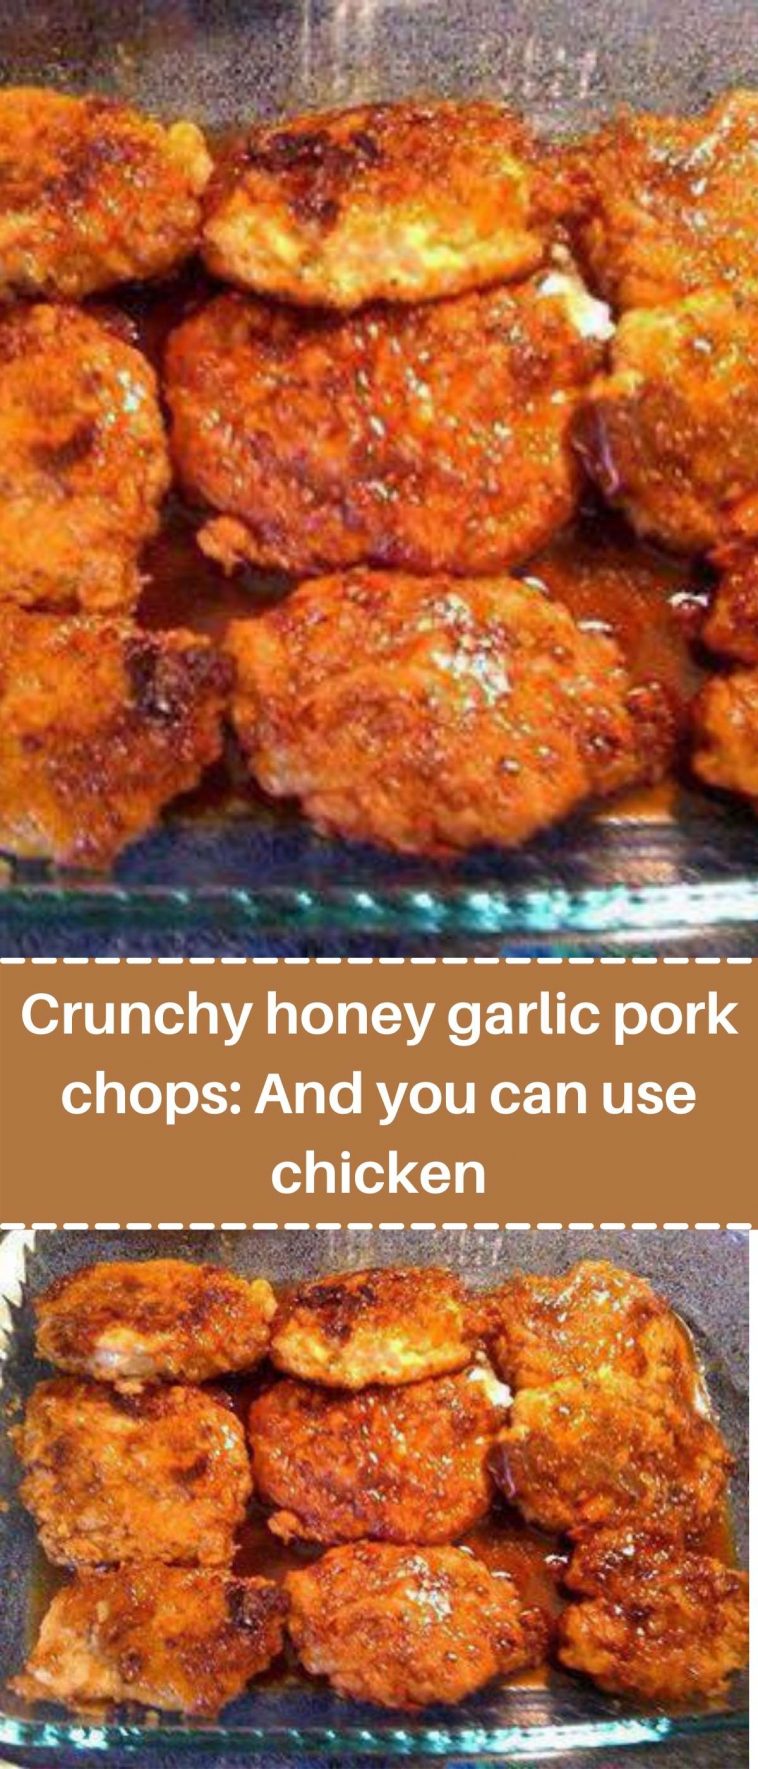 Crunchy honey garlic pork chops: And you can use chicken